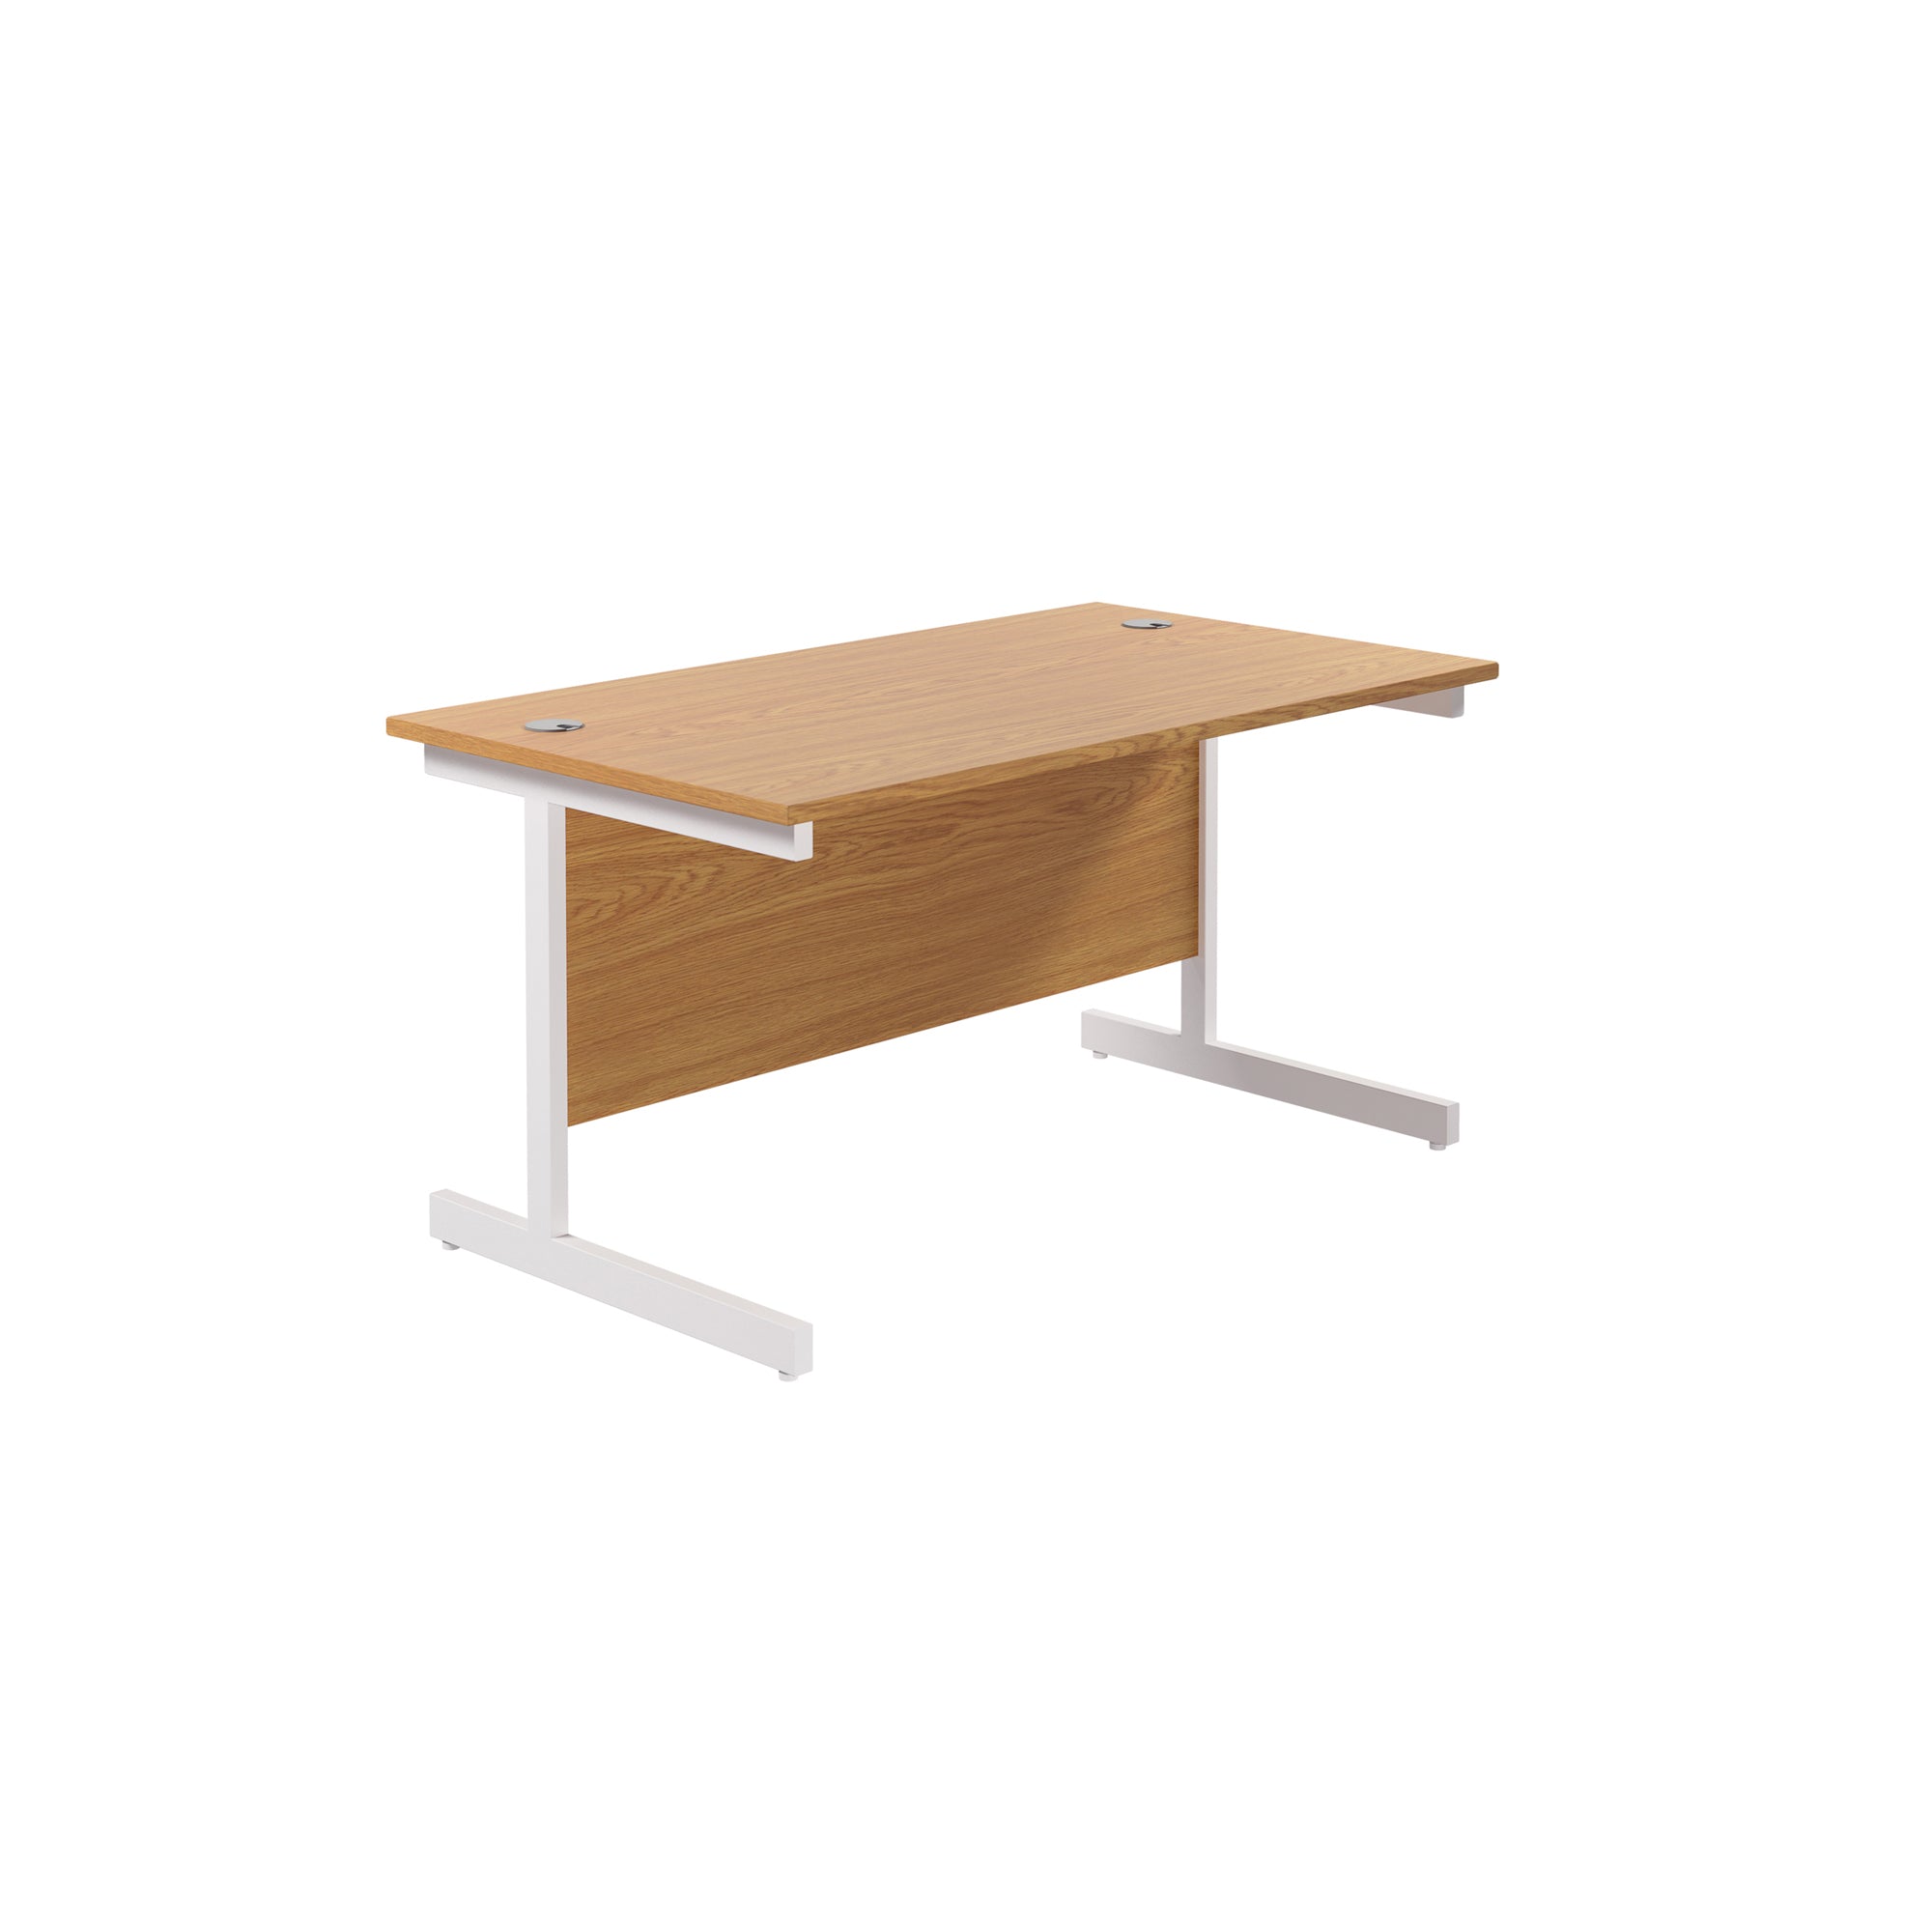 Single Upright Straight 1400mm Desk & Mobile Pedestal